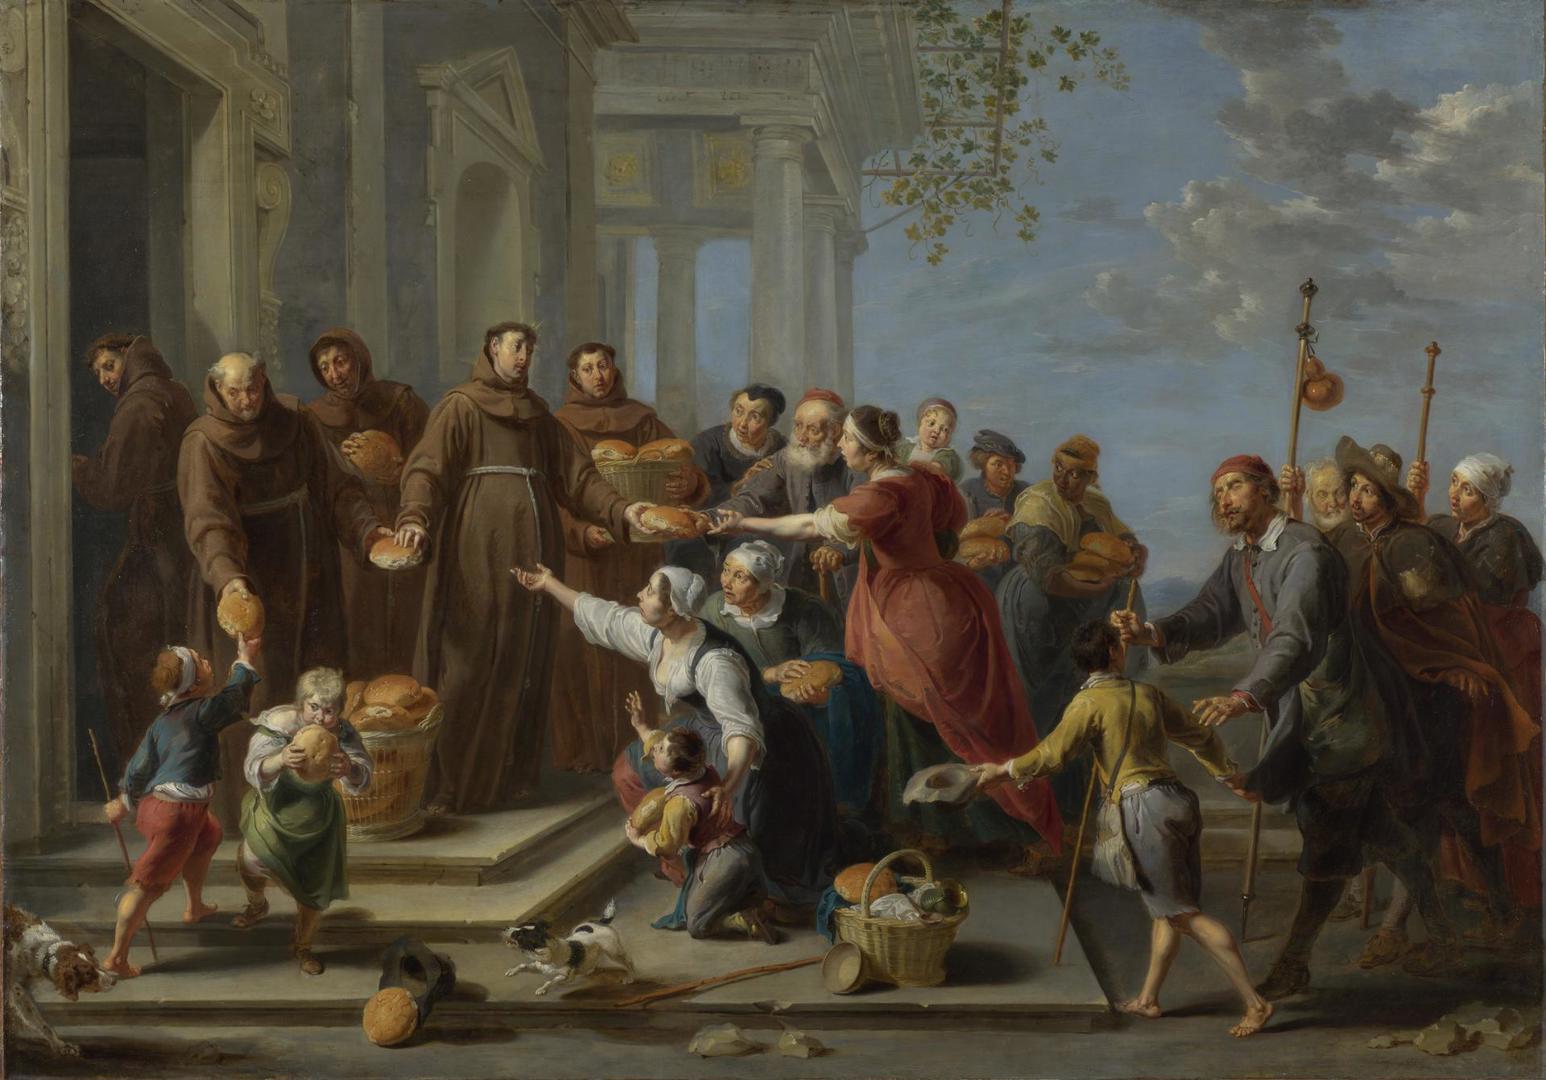 Saint Anthony of Padua (?) distributing Bread by Willem van Herp the Elder